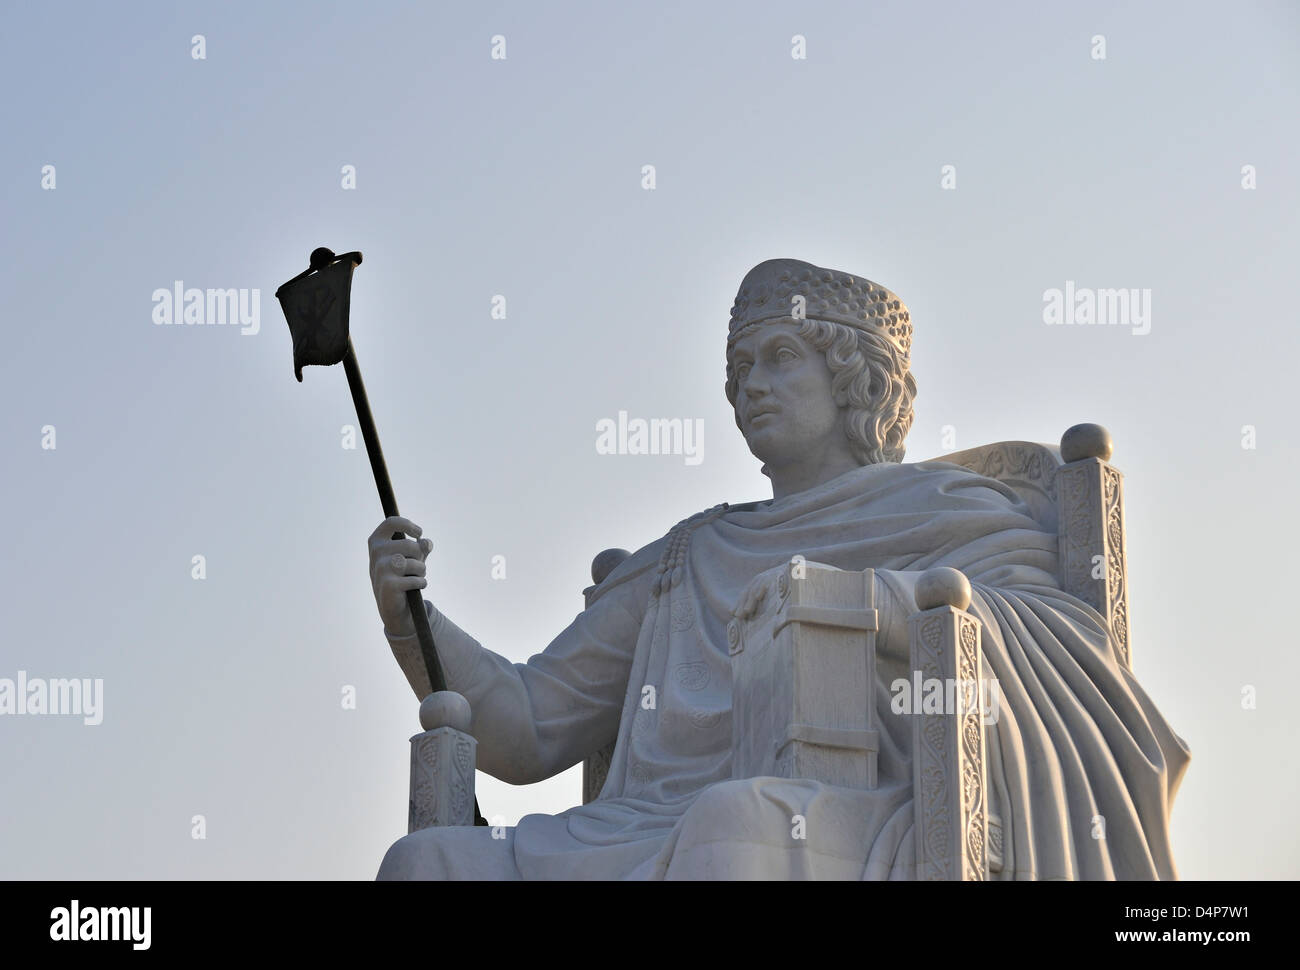 Byzantine Emperor Justinian I statue, Skopje, Macedonia Stock Photo